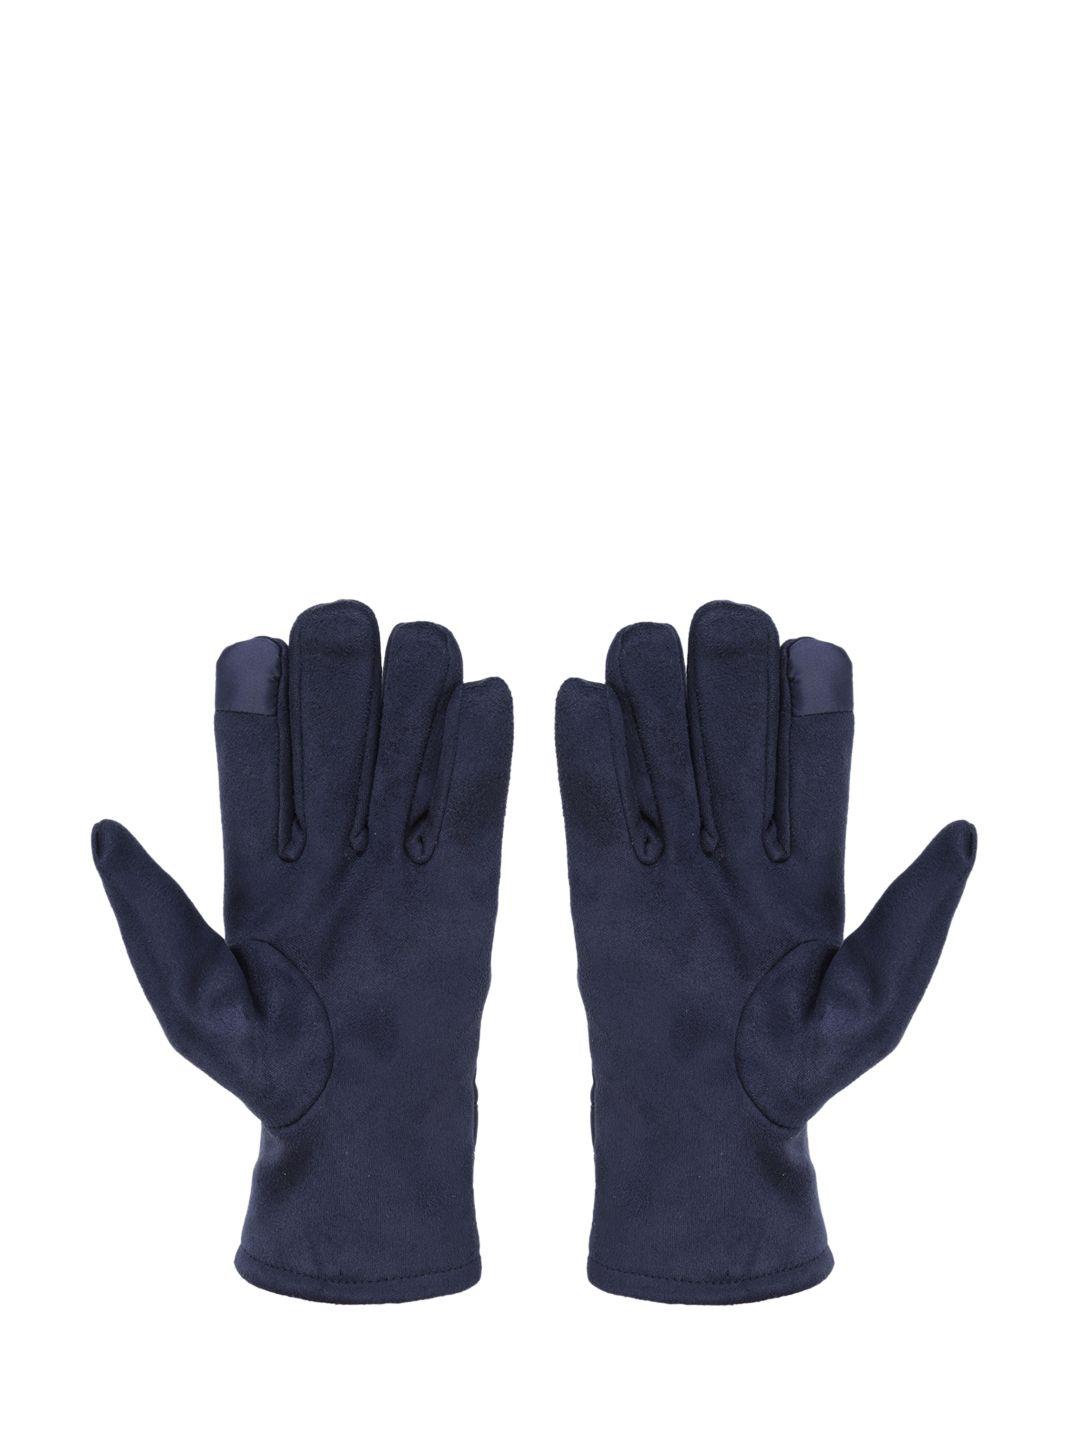 fabseasons unisex blue solid winter gloves